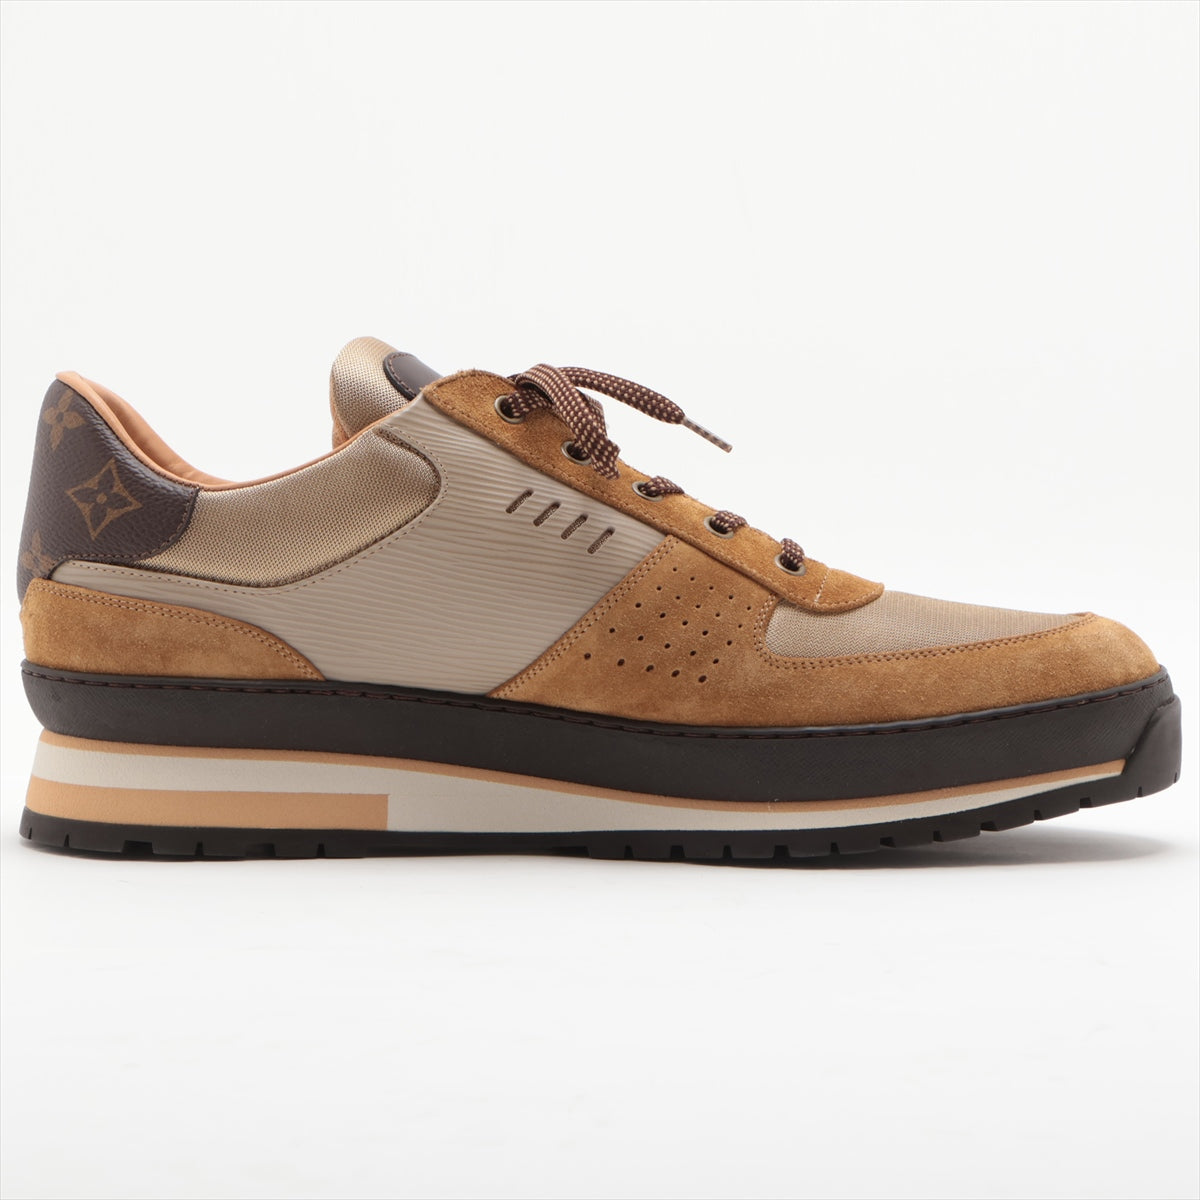 Louis Vuitton Harlem line 19-year Leather & Suede Sneakers 12 Men's Brown x gold BM1109 Monogram Epi Richelieu